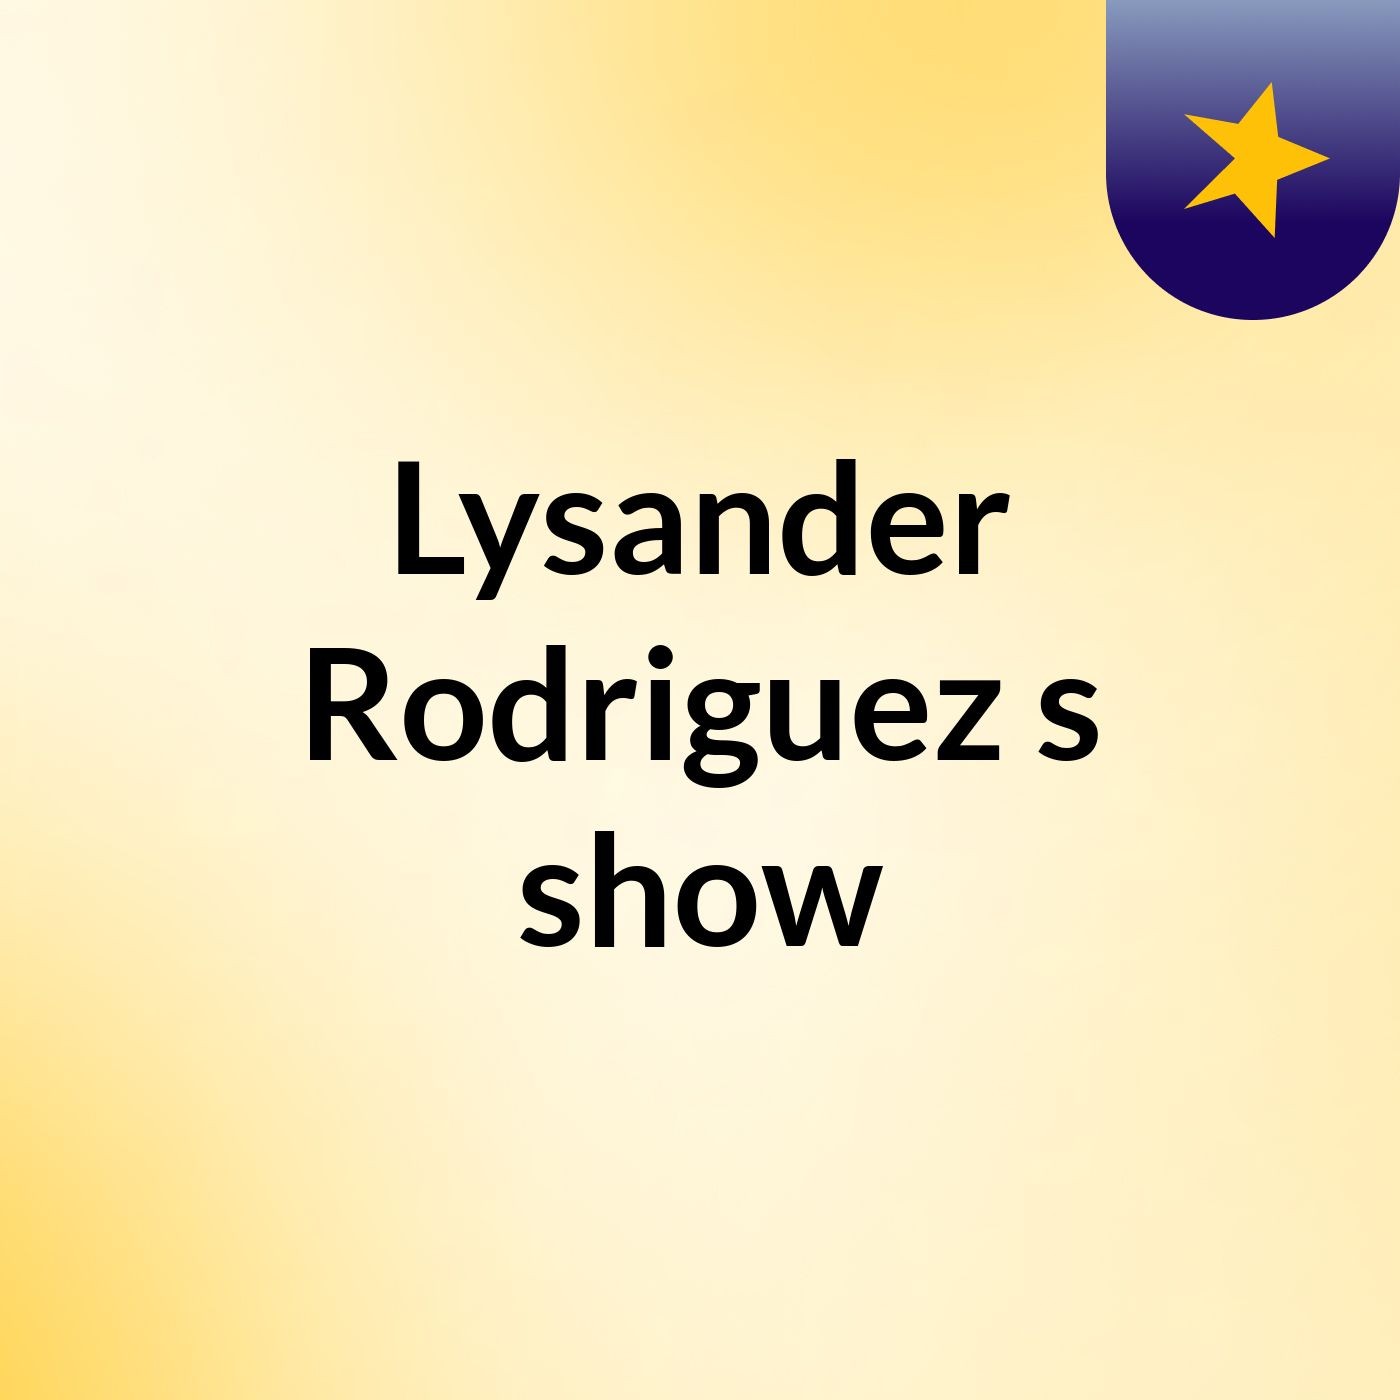 Lysander Rodriguez's show